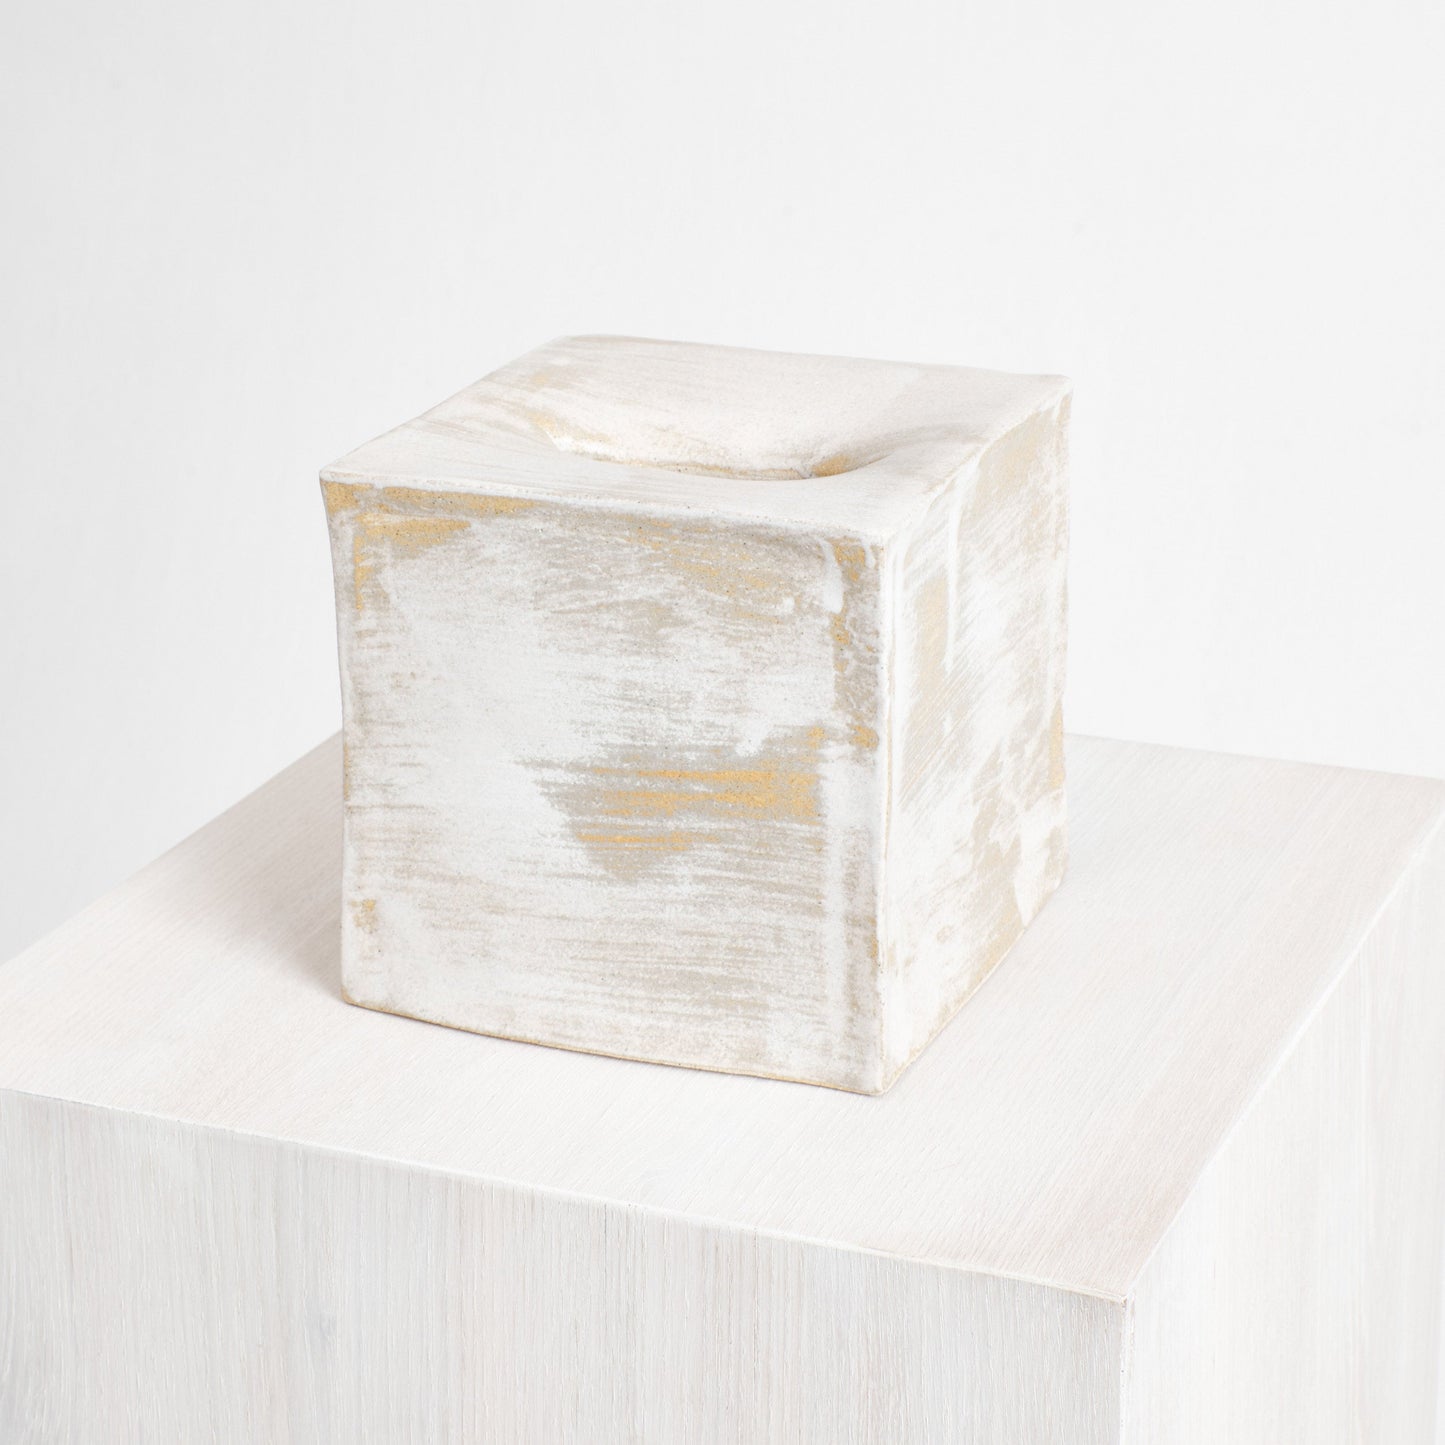 Ceramic Tissue Box - Square in Brushed White